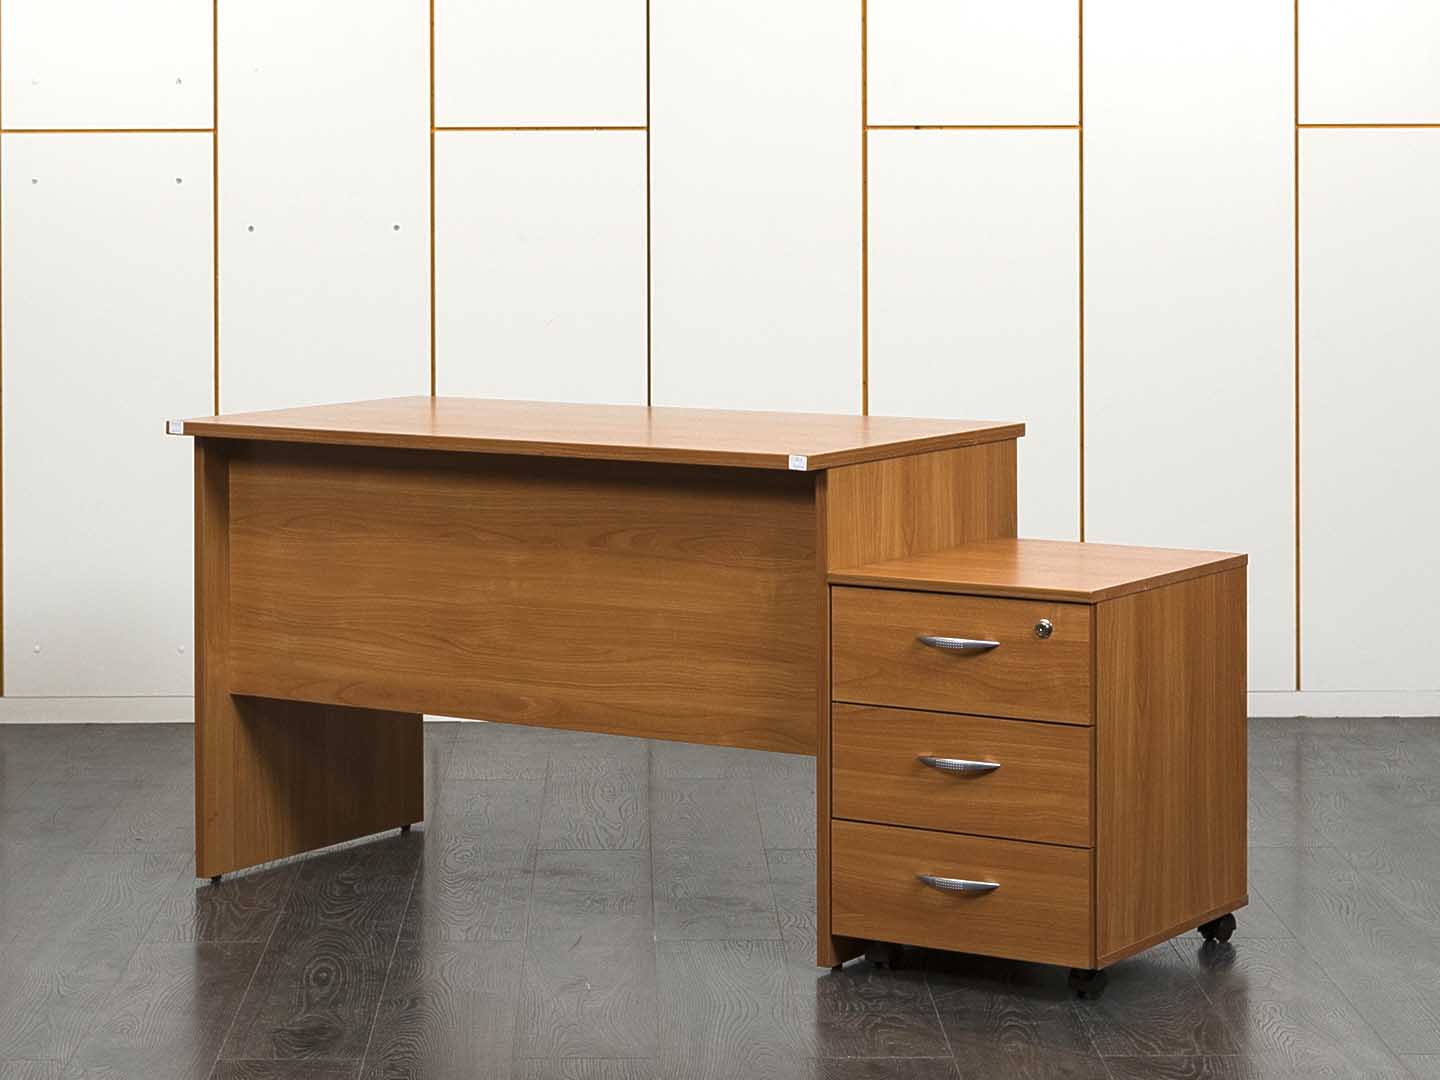 Комплект офисной мебели стол с тумбой  1 200х670х750 ЛДСП Ольха   (СППЛК-28041)